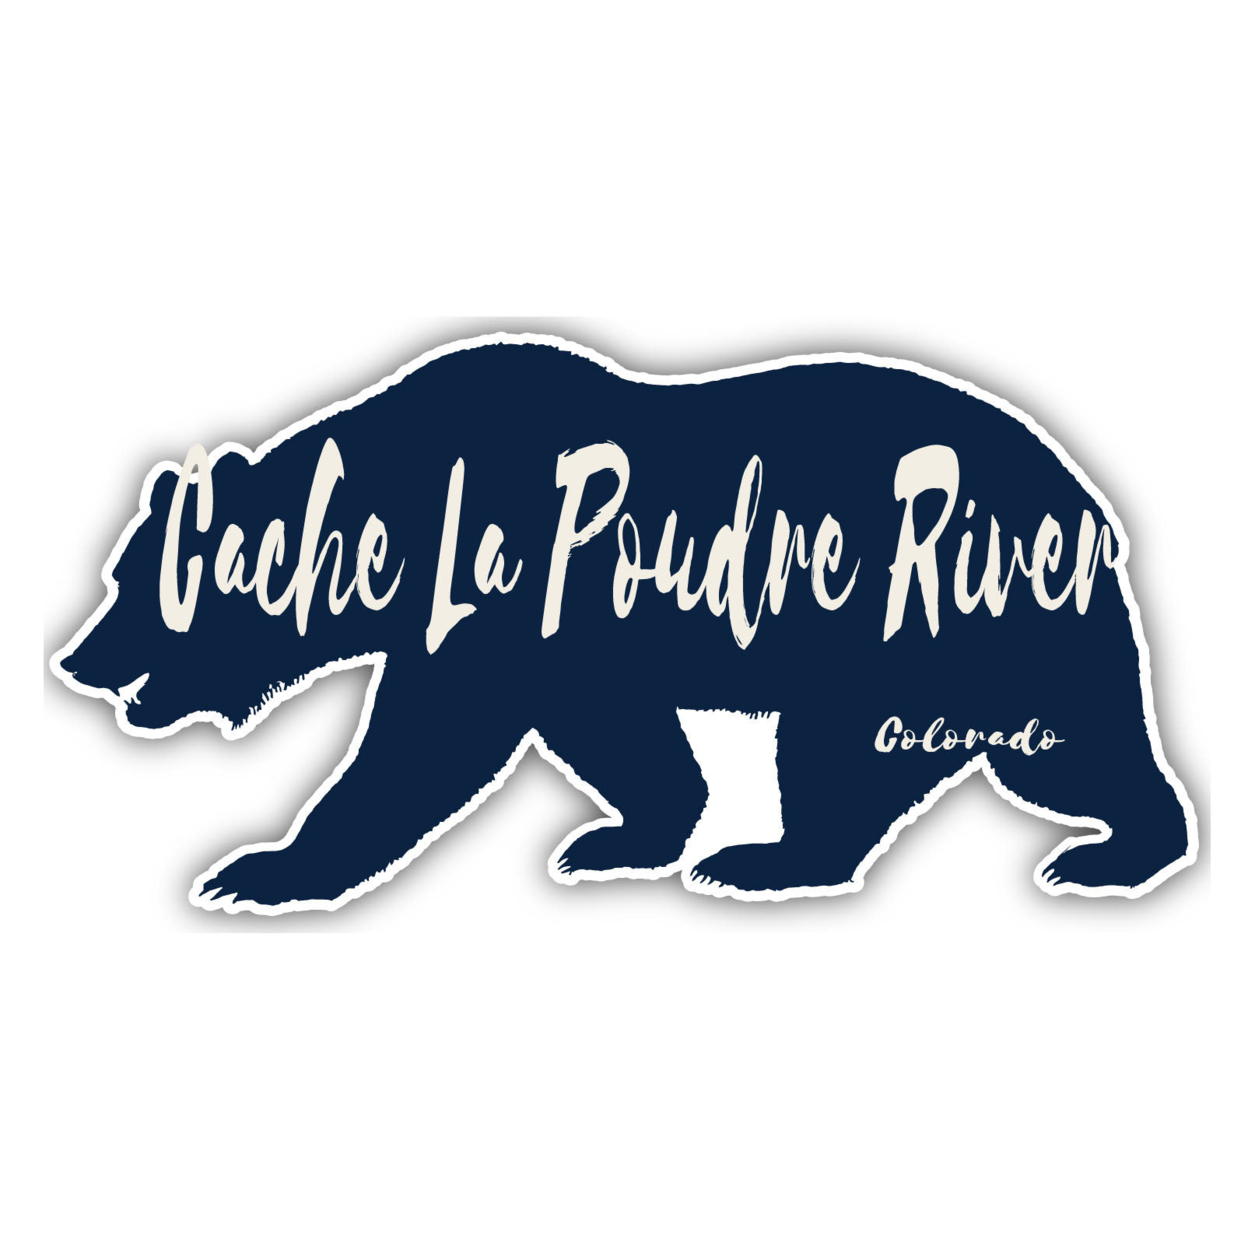 Cache La Poudre River Colorado Souvenir Decorative Stickers (Choose Theme And Size) - Single Unit, 6-Inch, Bear